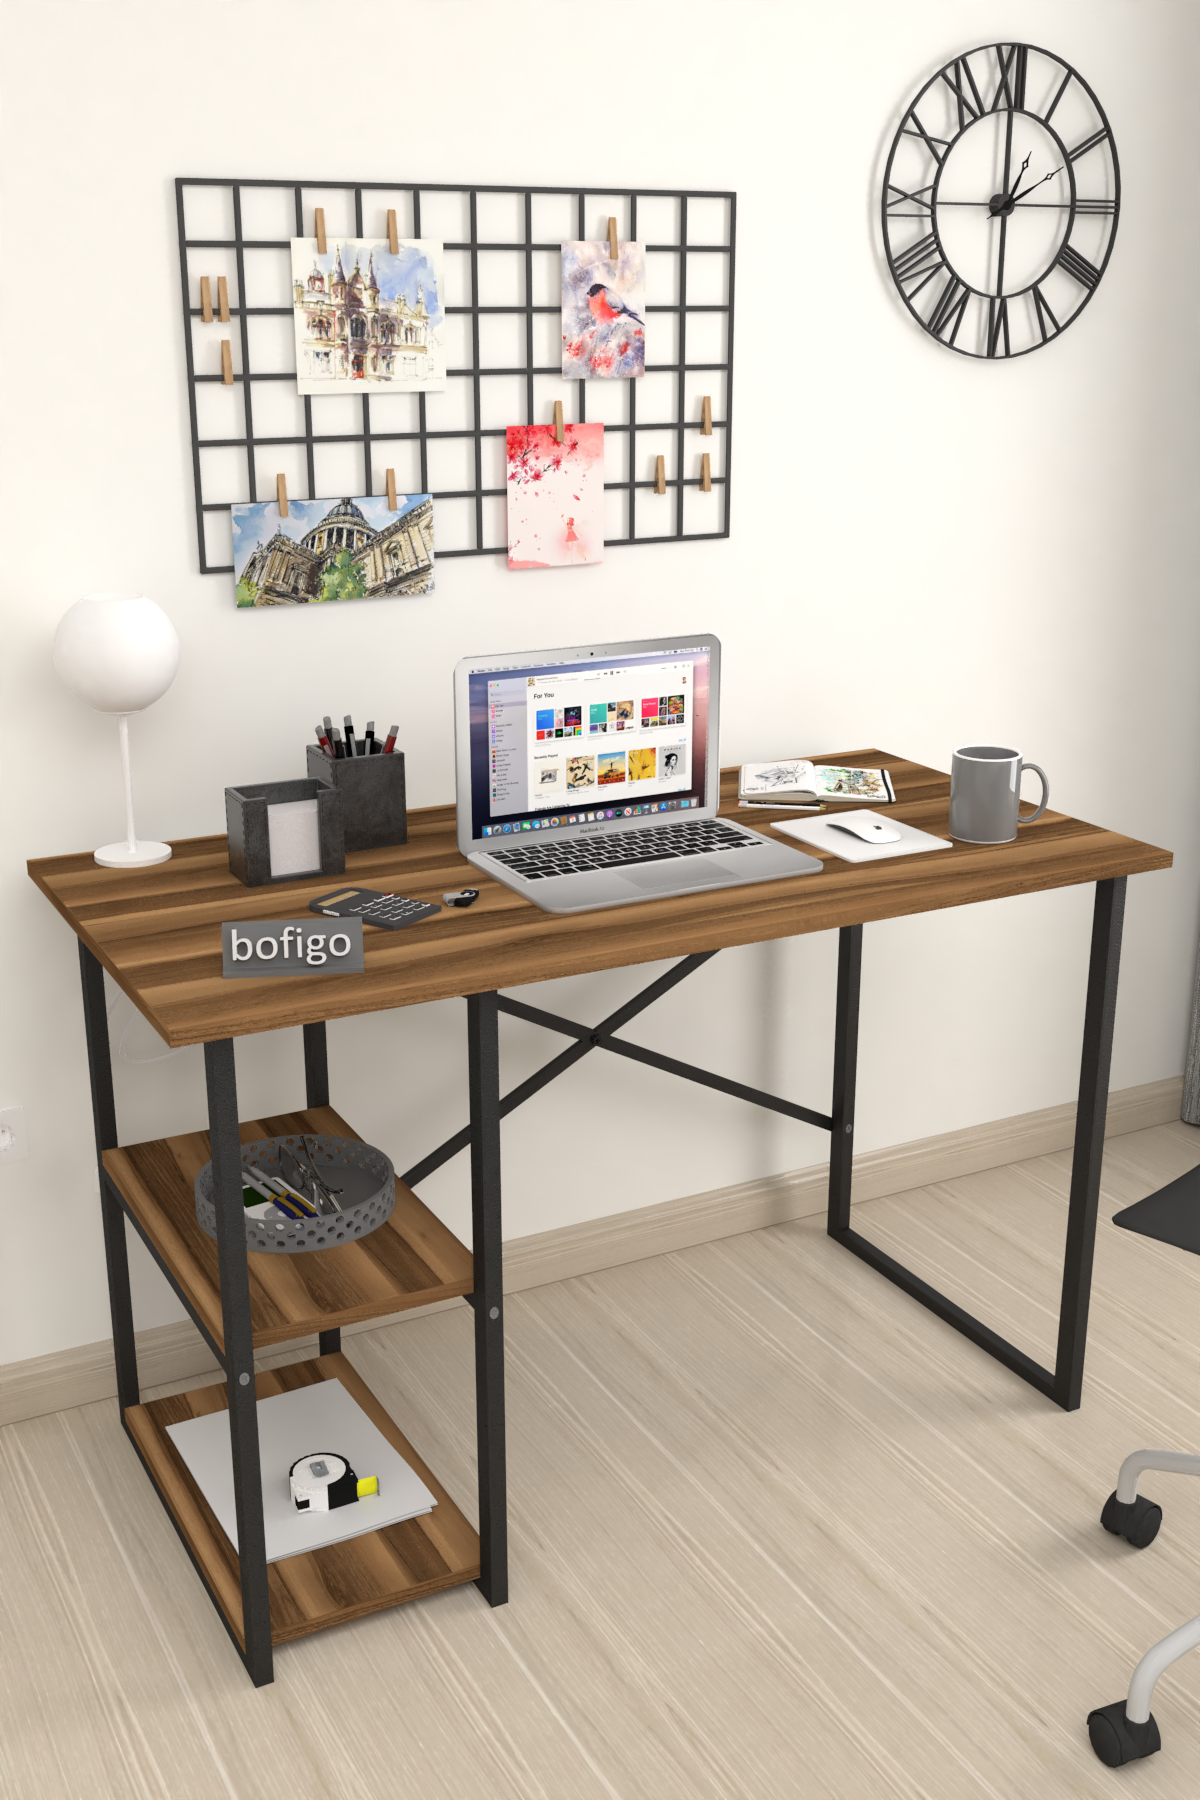 Bofigo 2 Shelf Study Desk 60x120 cm  Walnut